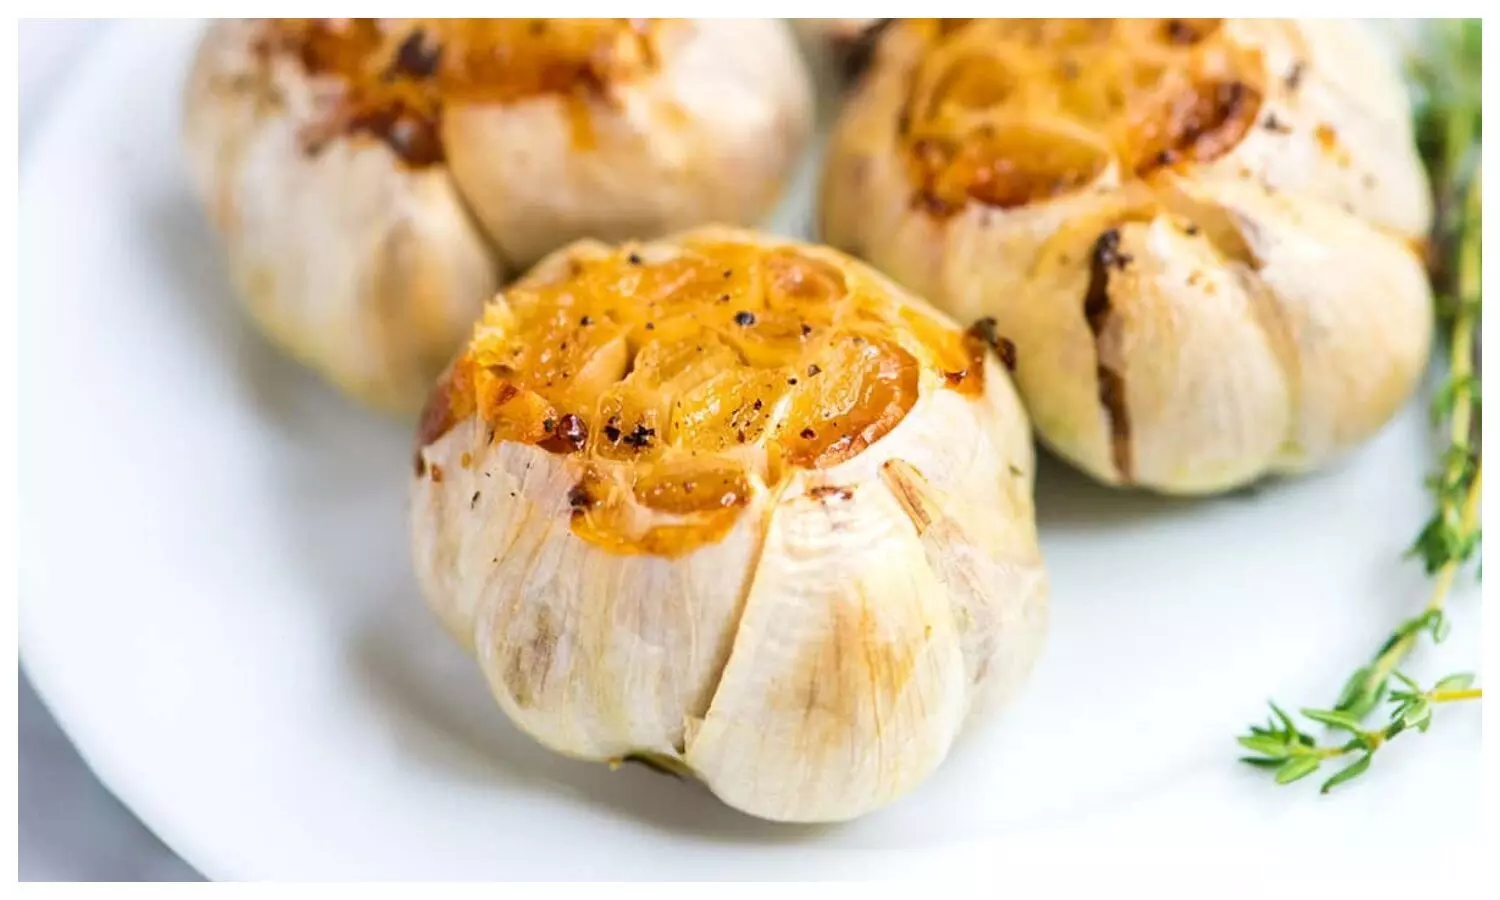 Benefits of eating roasted garlic